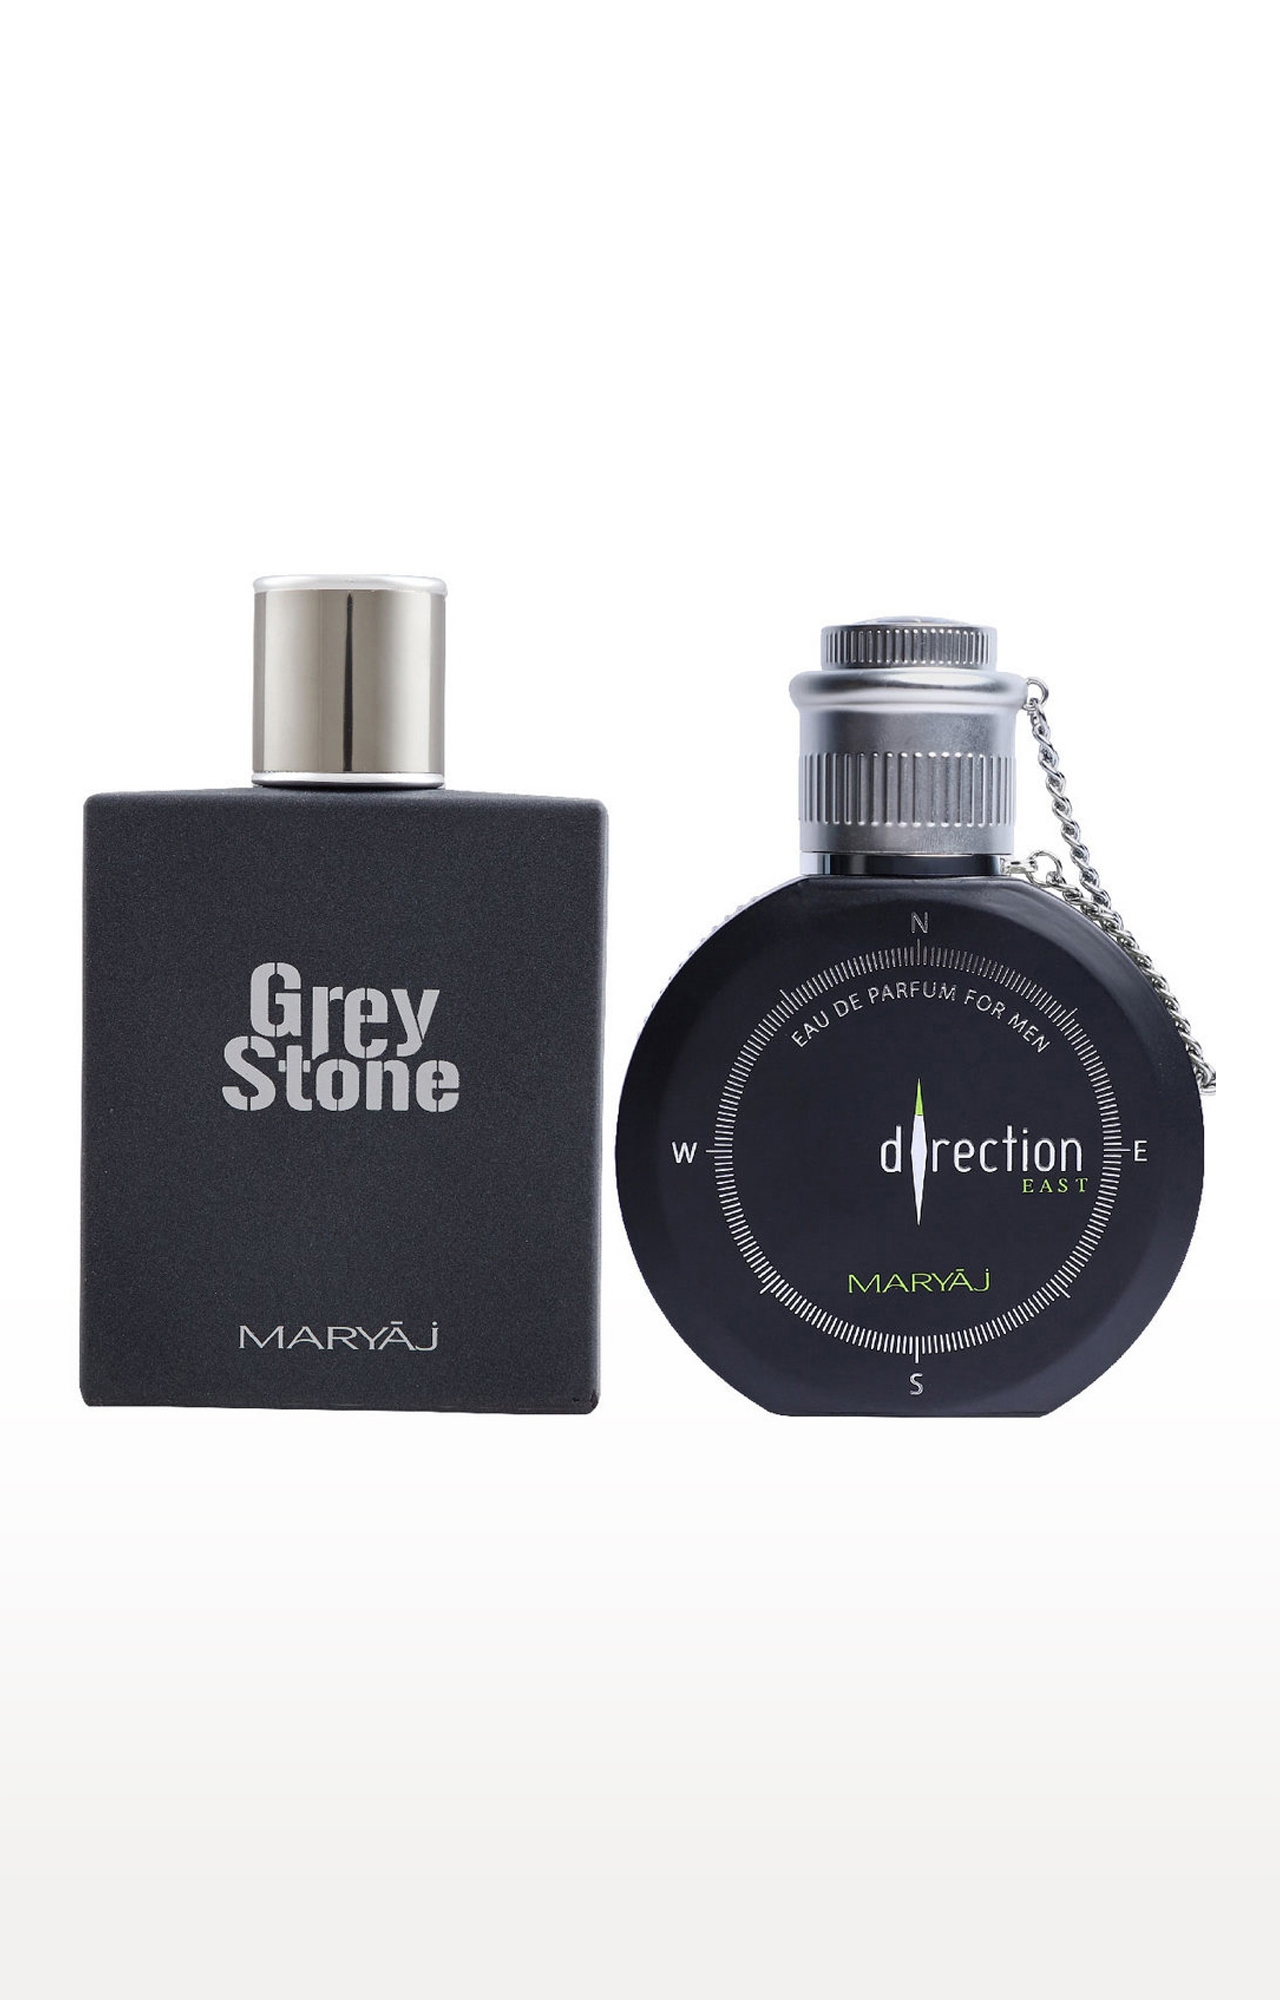 Maryaj Grey Stone Eau De Parfum Perfume 100ml for Men and Maryaj Direction East Eau De Parfum Perfume 100ml for Men